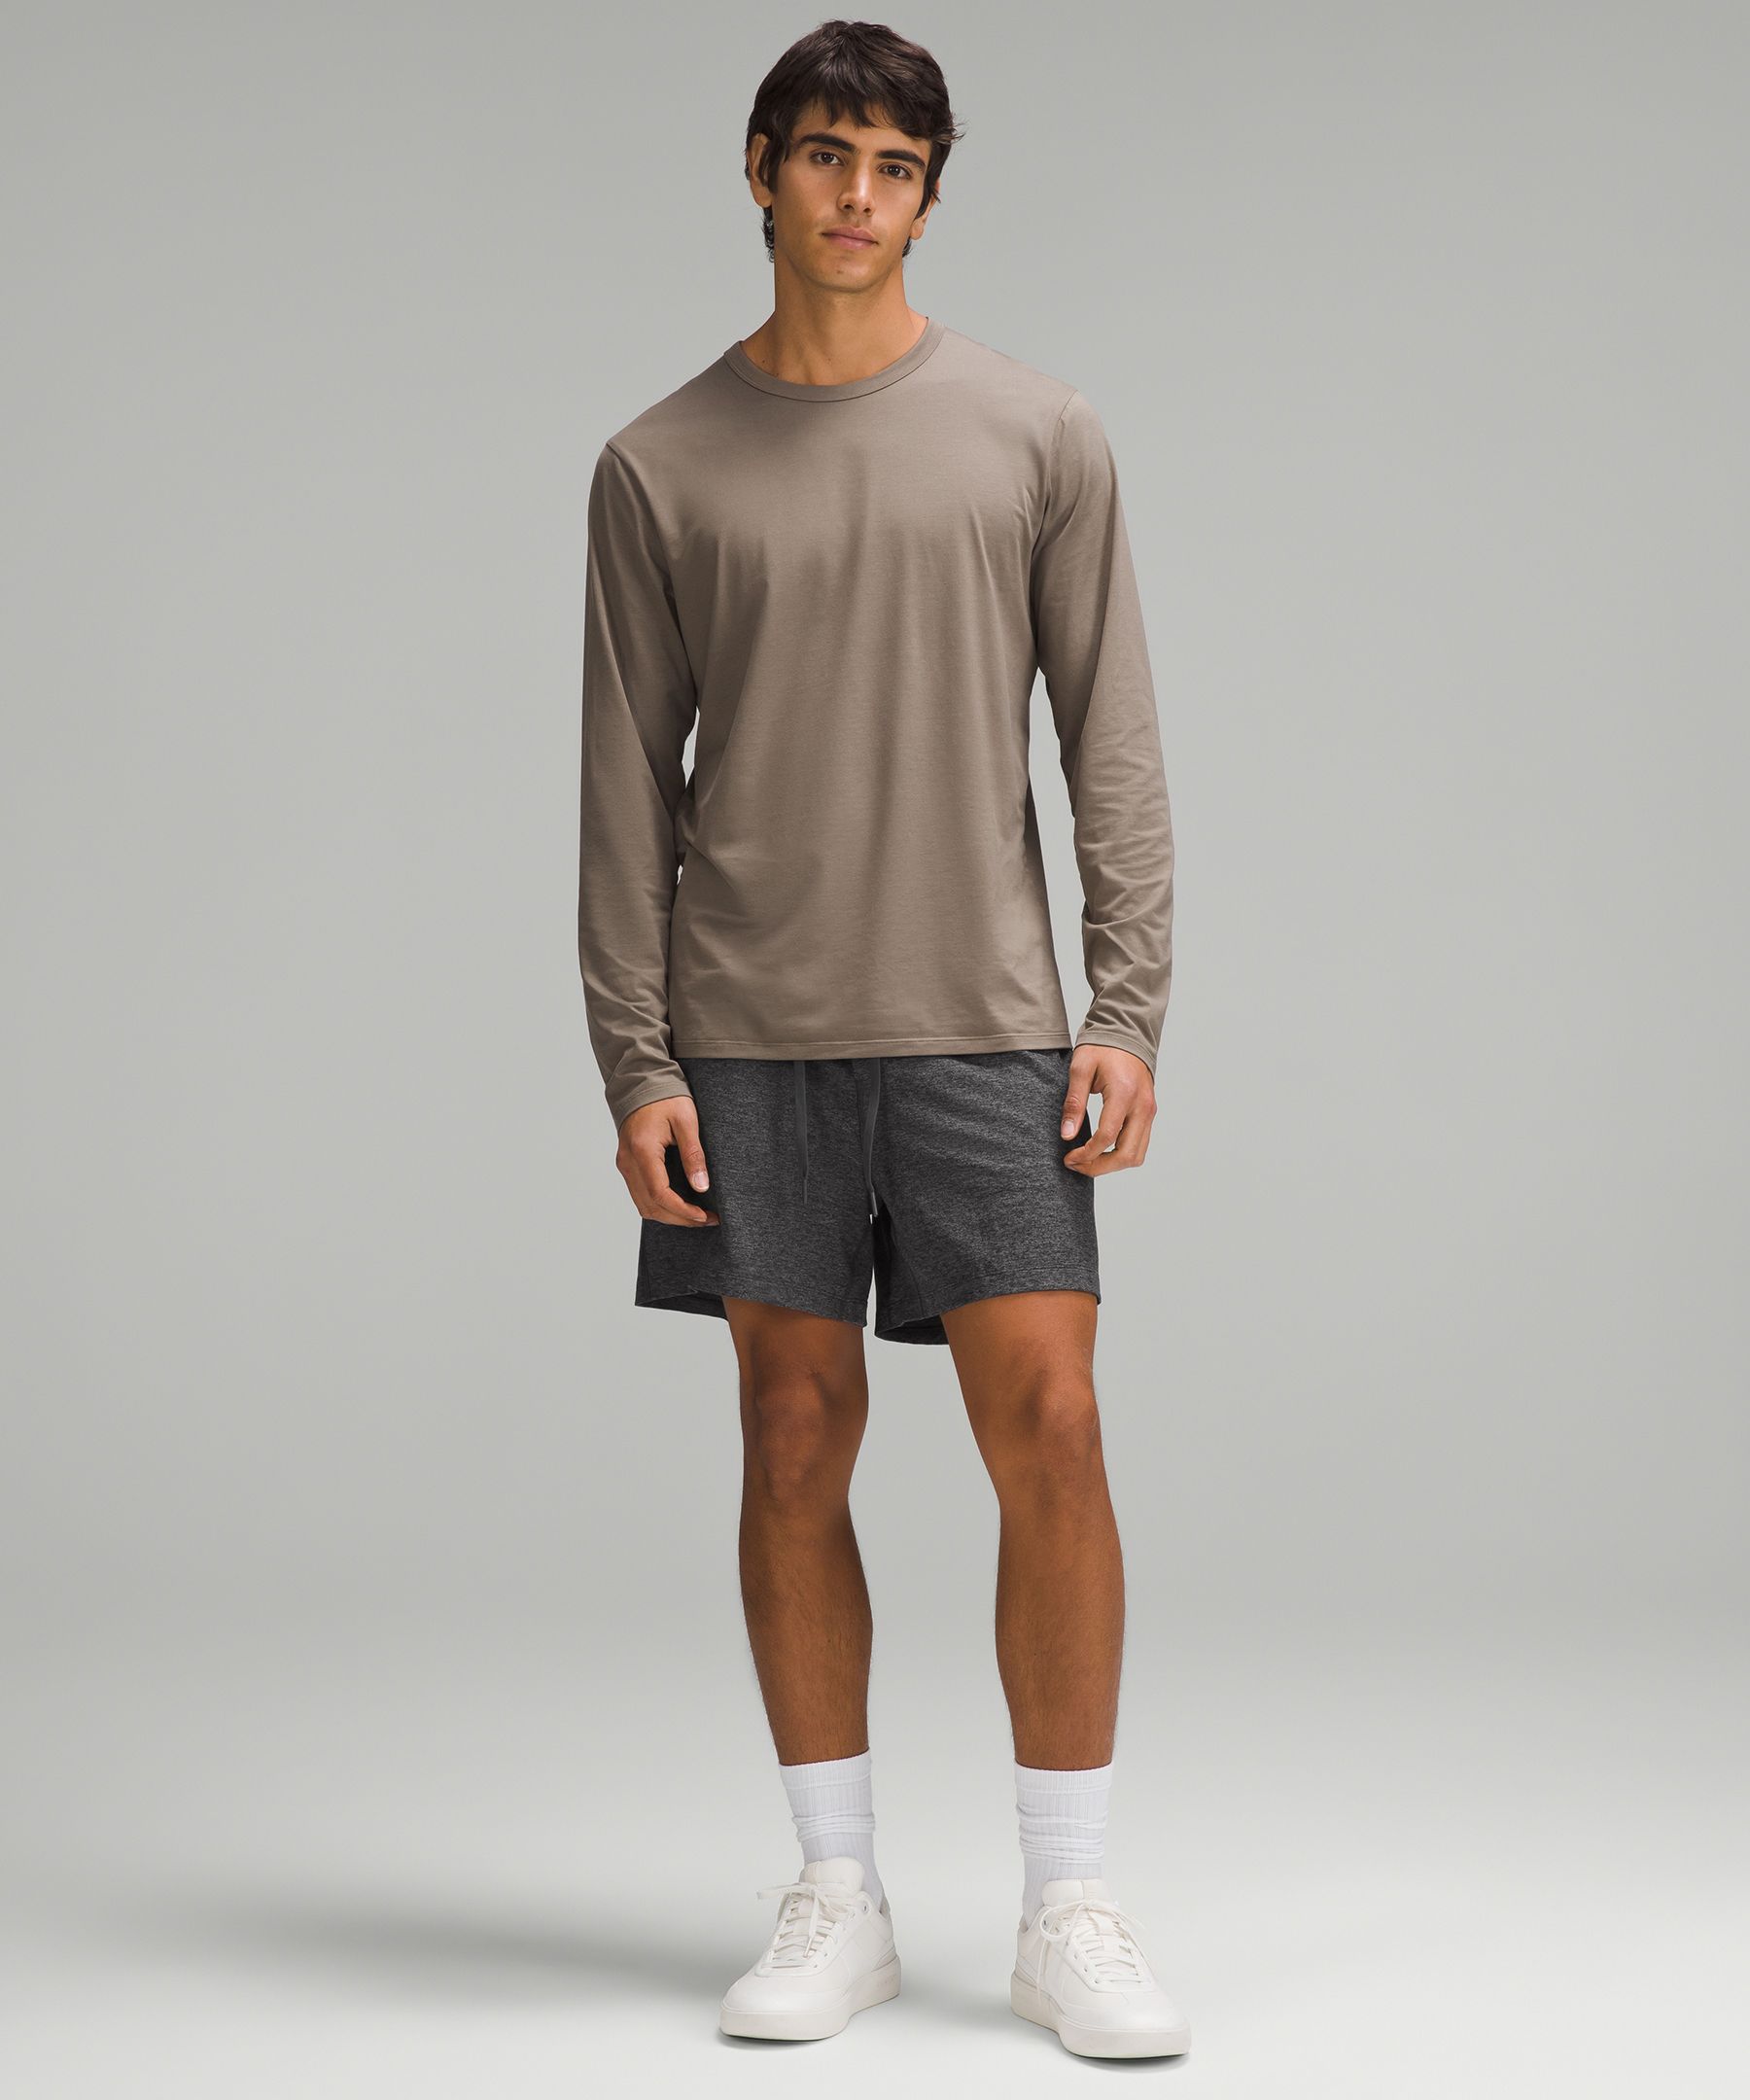 Soft Jersey Short 5, Men's Shorts